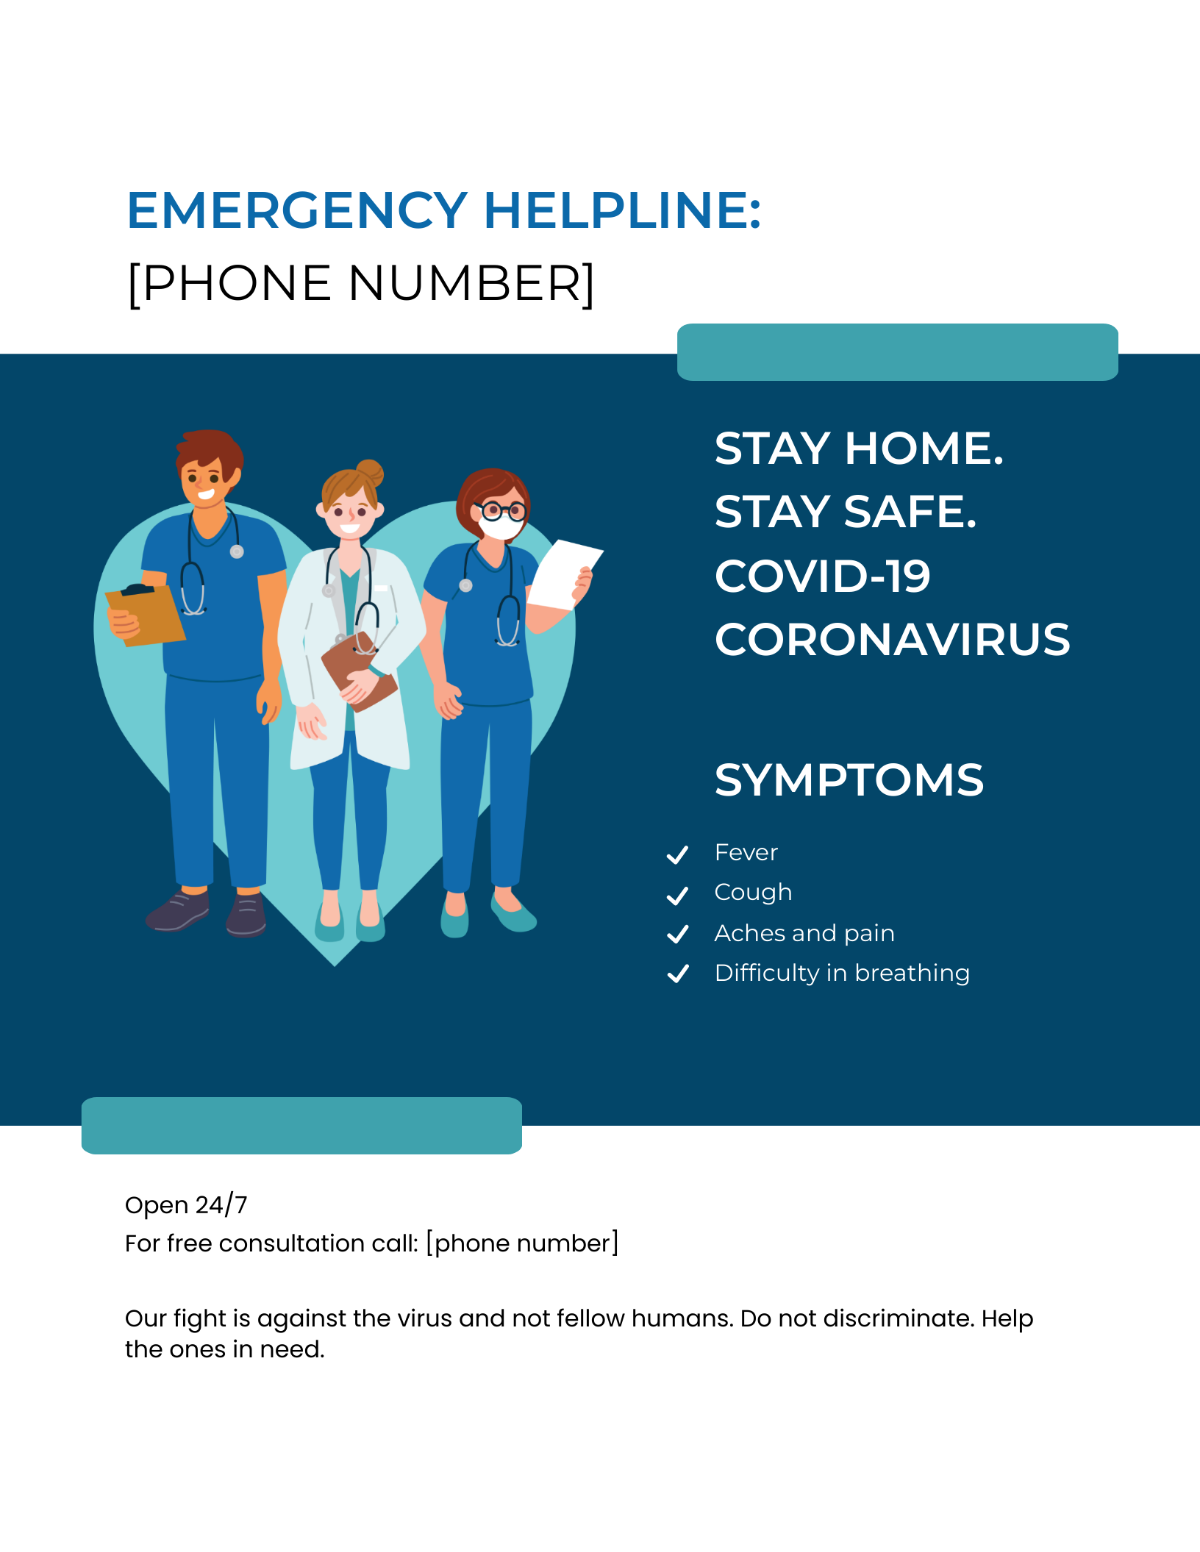 COVID-19 Coronavirus Medical Campaign Flyer Template